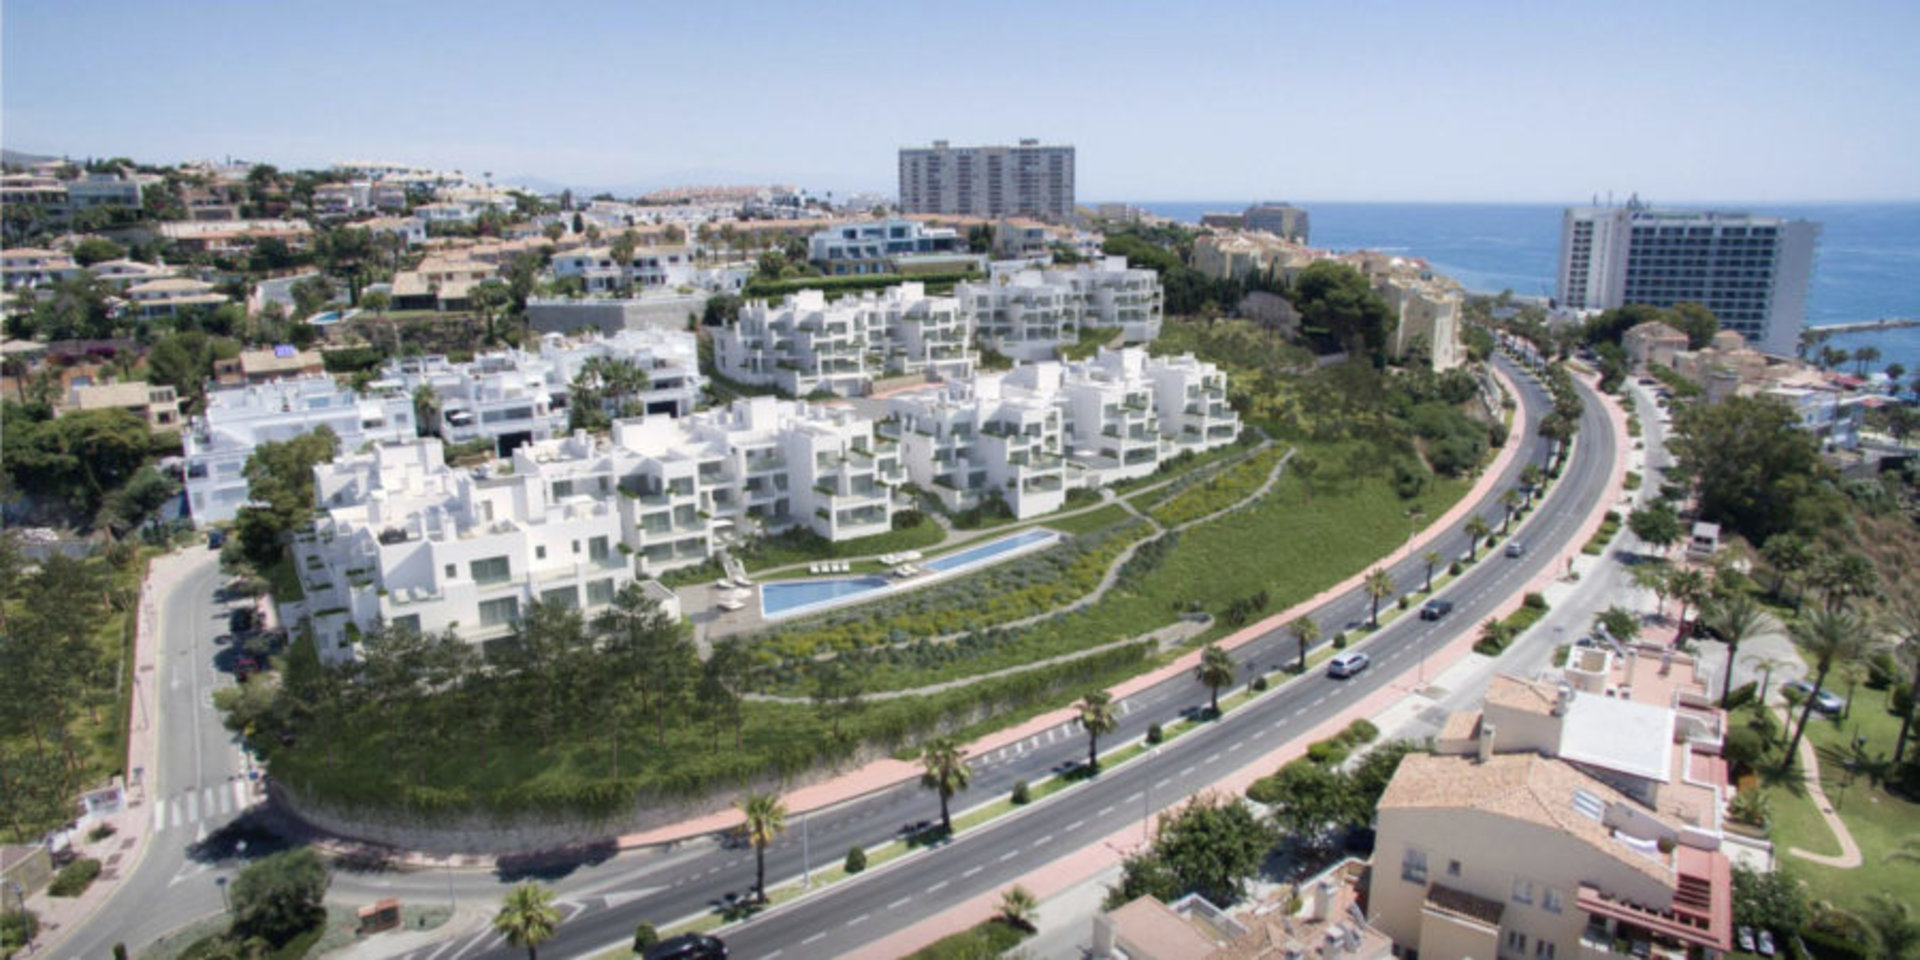 Lar Bay seaside apartments